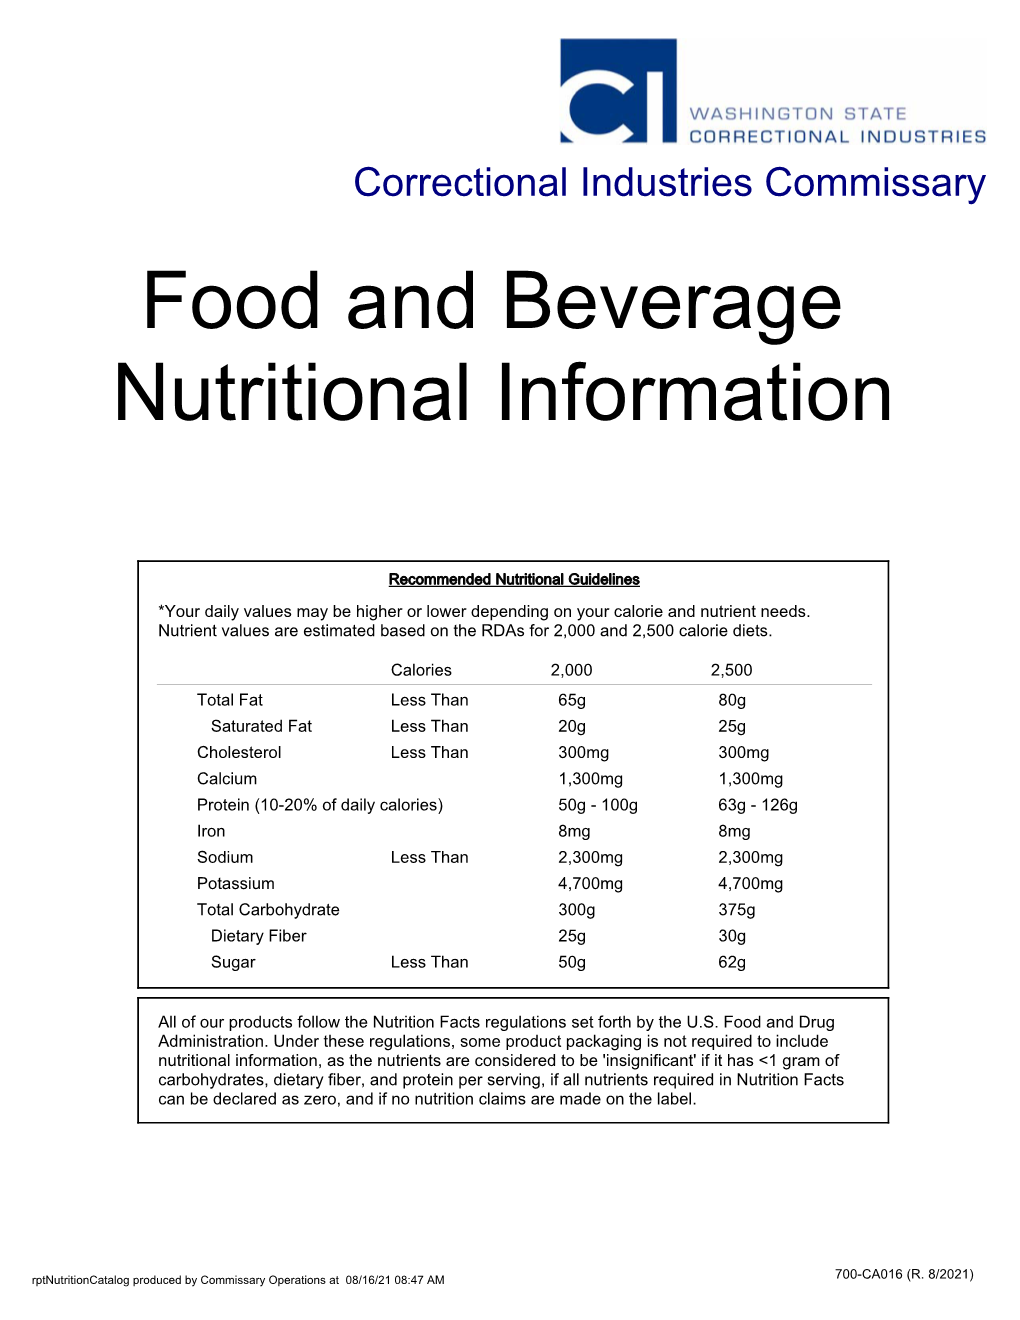 Correctional Industries Nutrition Catalog (700-CA016)